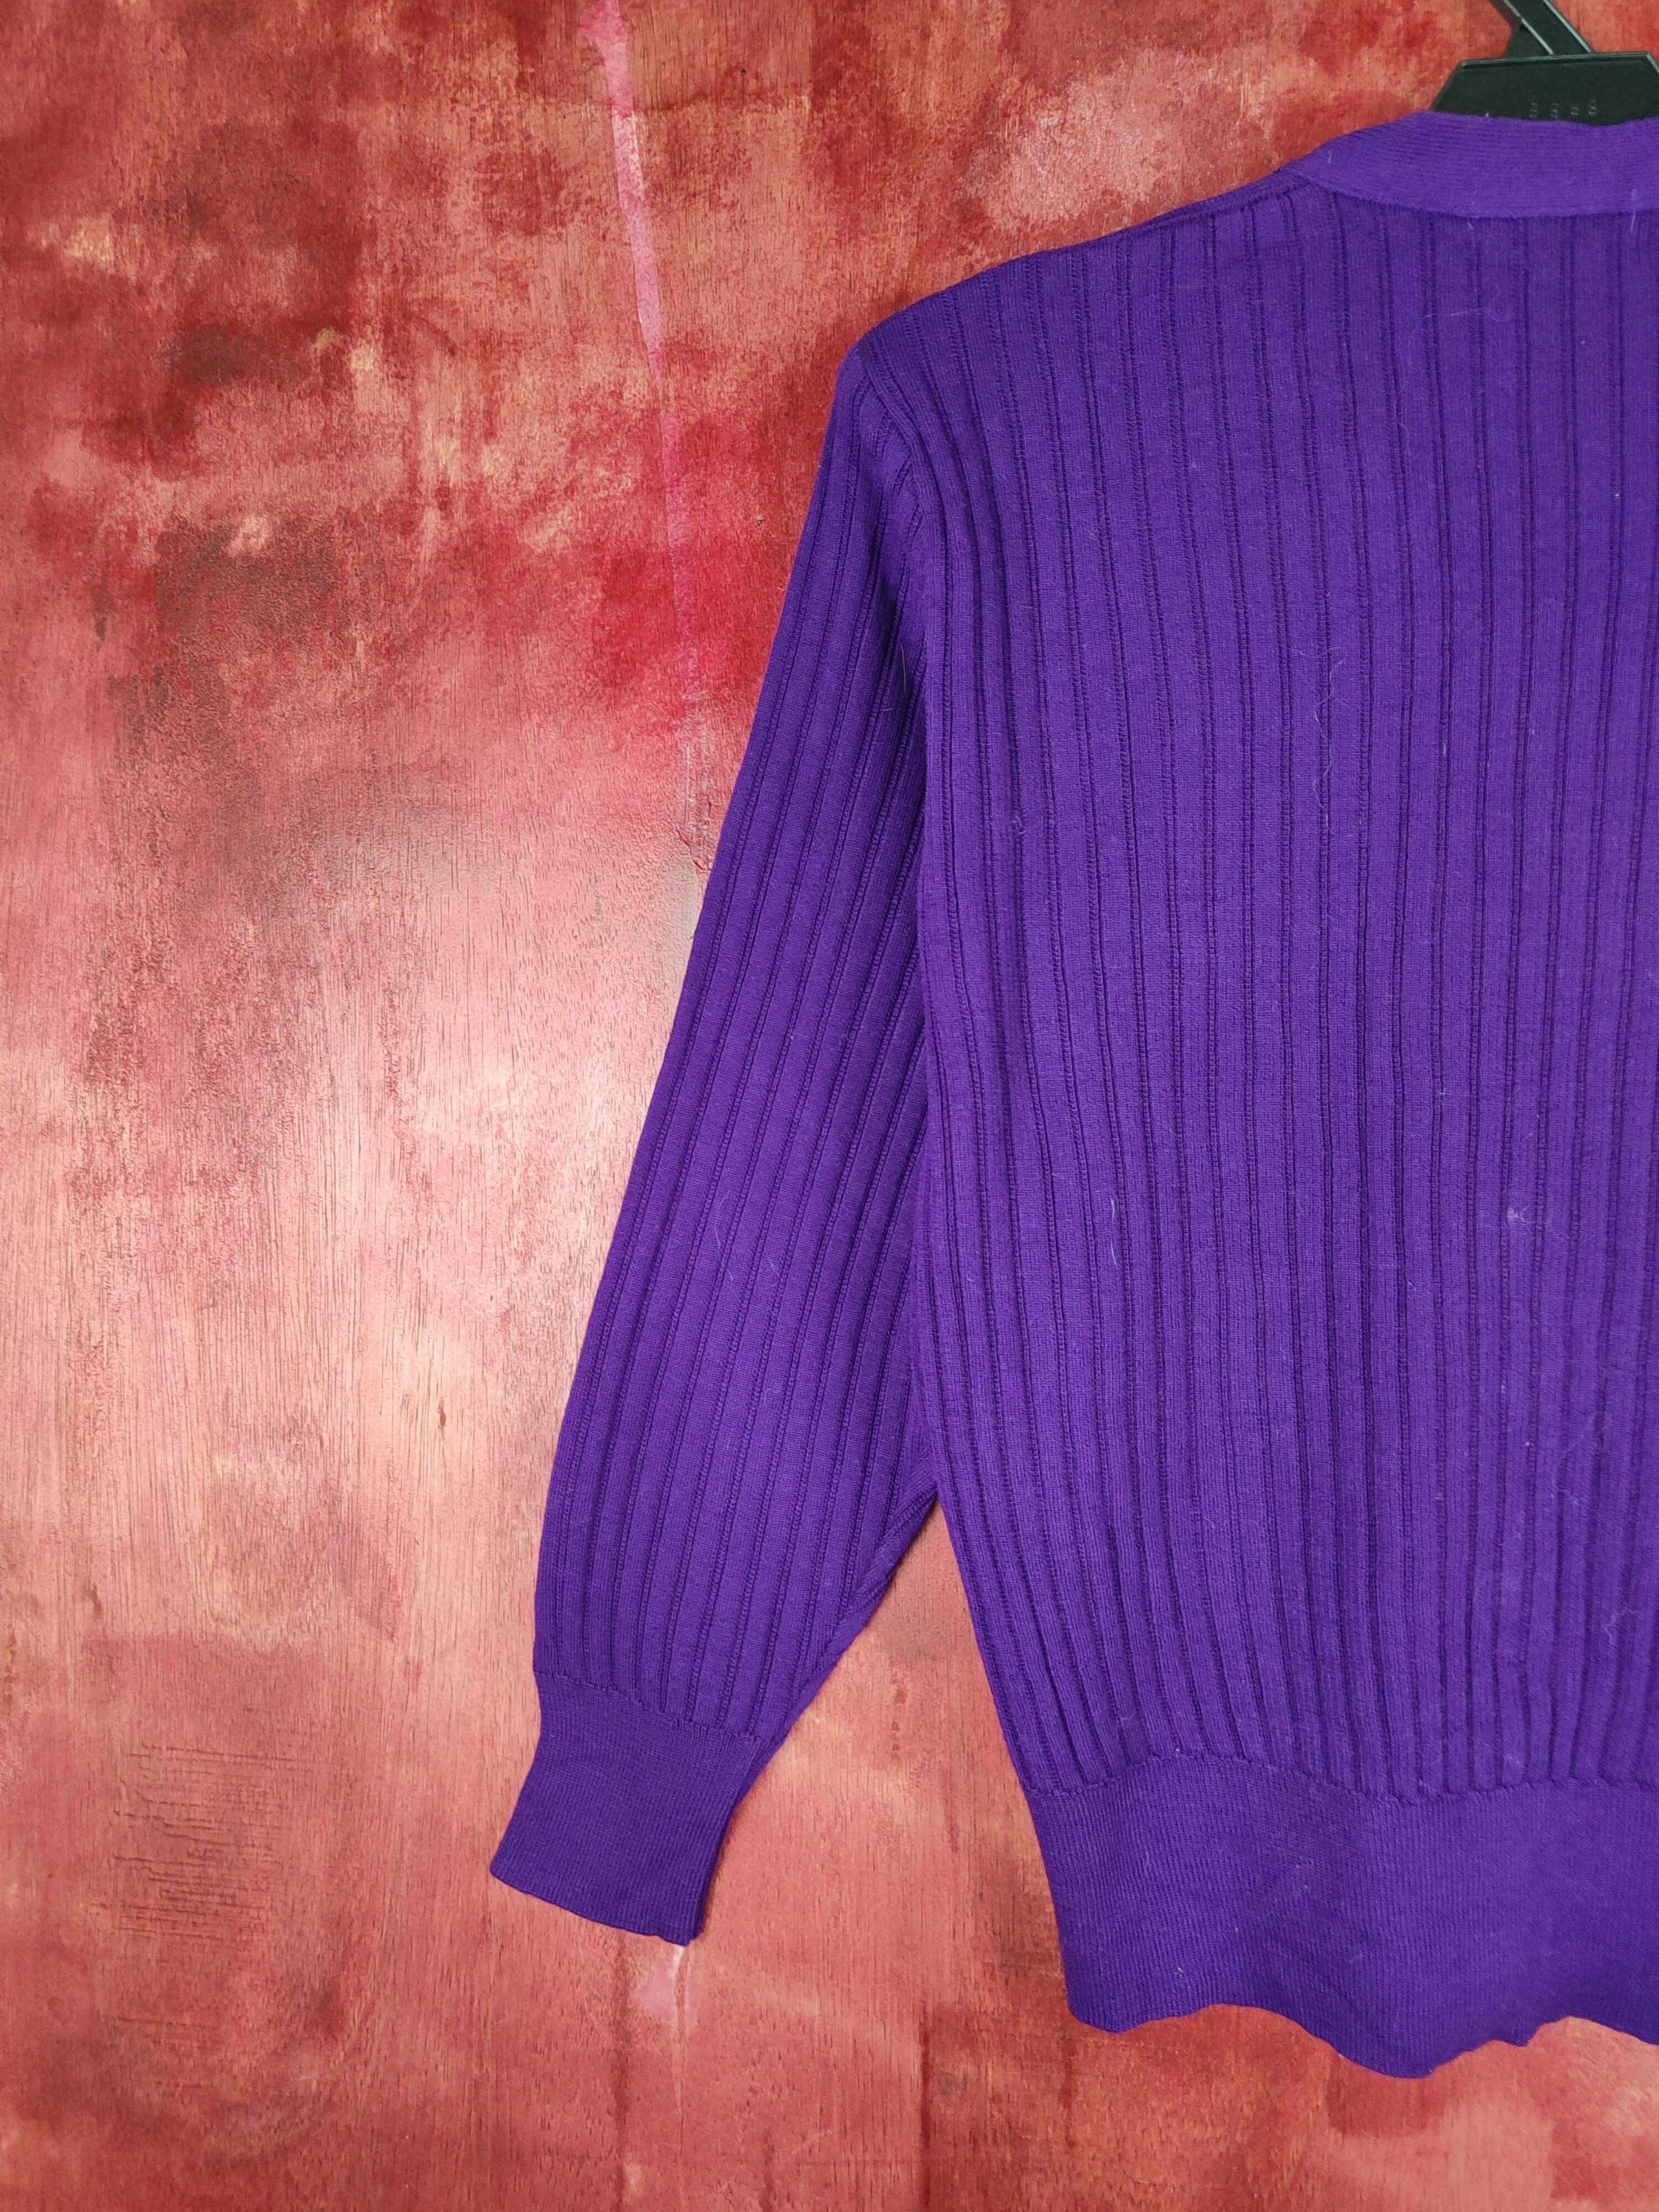 Japanese Brand Kosugi Purple Knitwear Cardigan Crop Tops Size L / US 10 / IT 46 - 7 Thumbnail